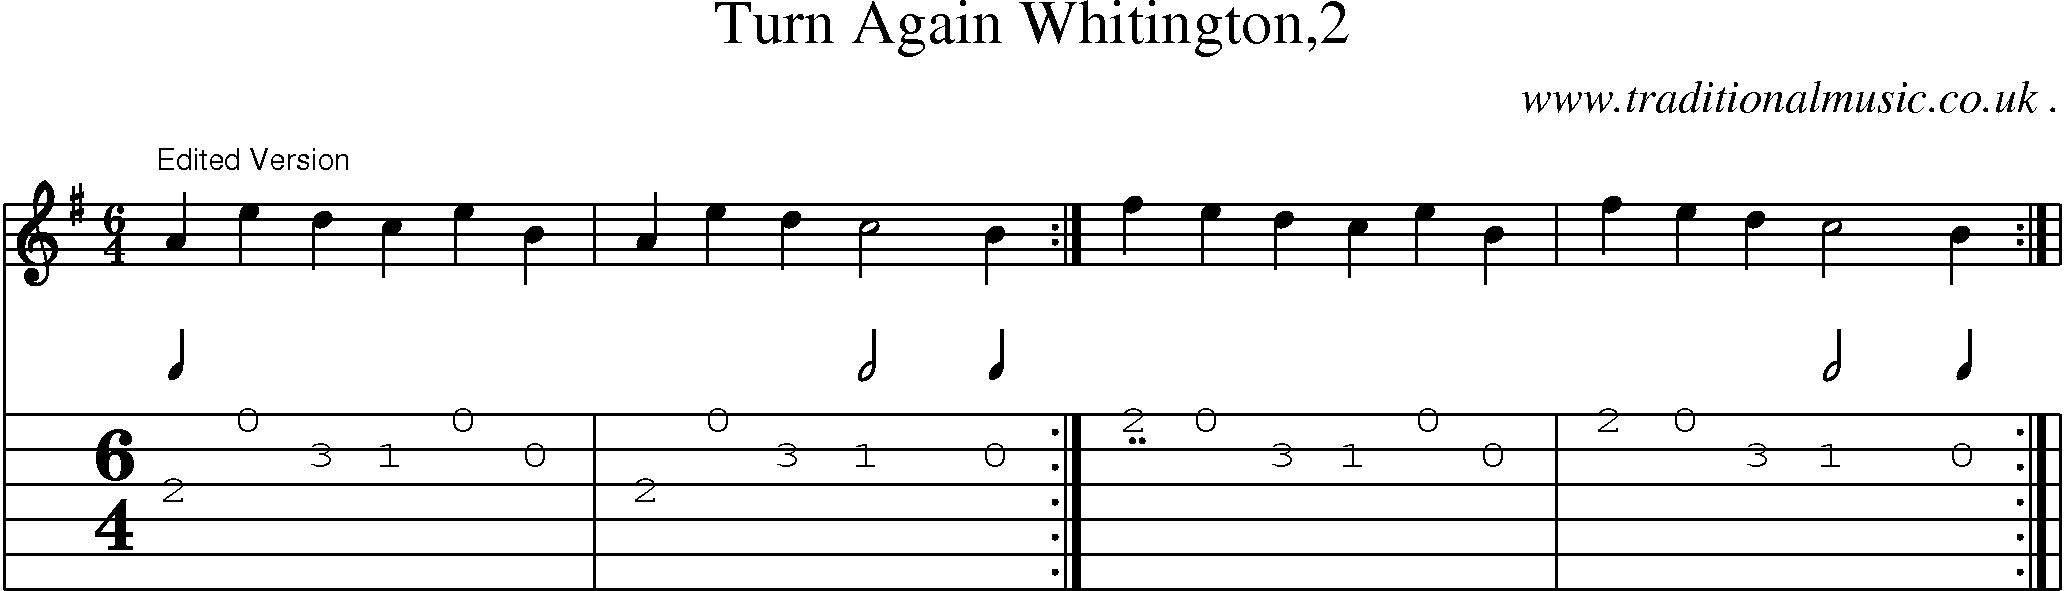 Sheet-Music and Guitar Tabs for Turn Again Whitington2